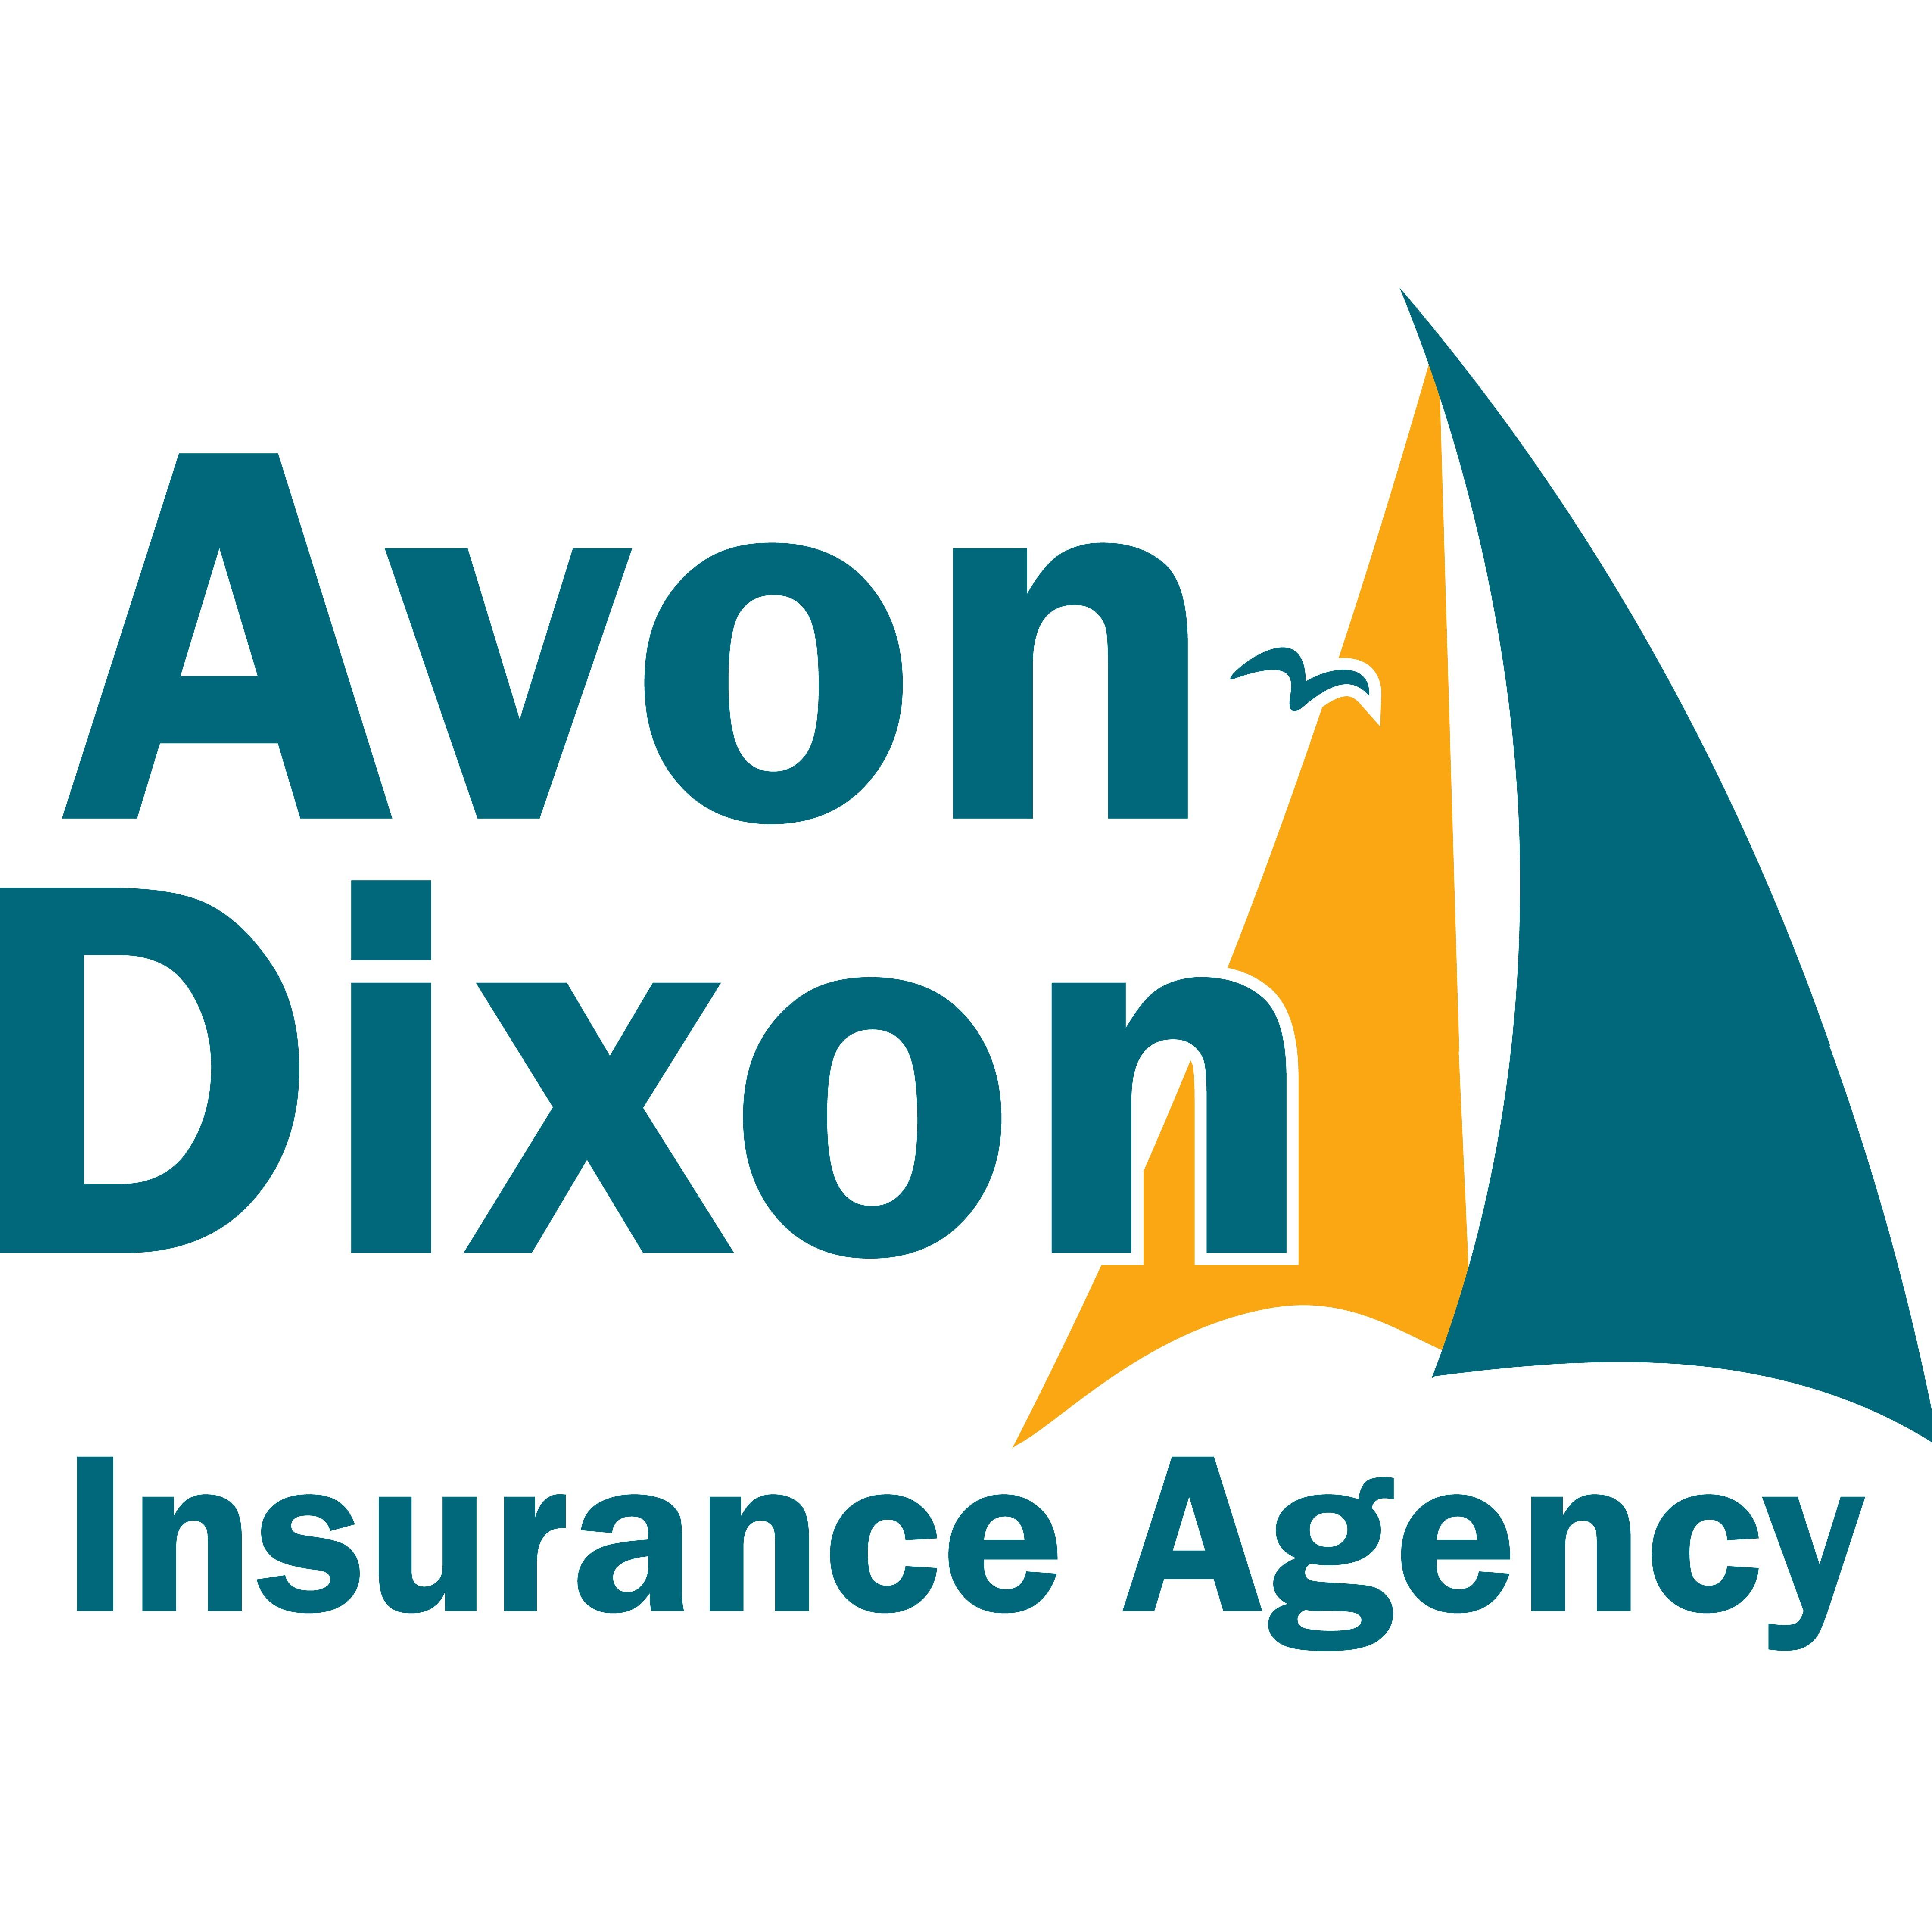 Dixon insurance company information